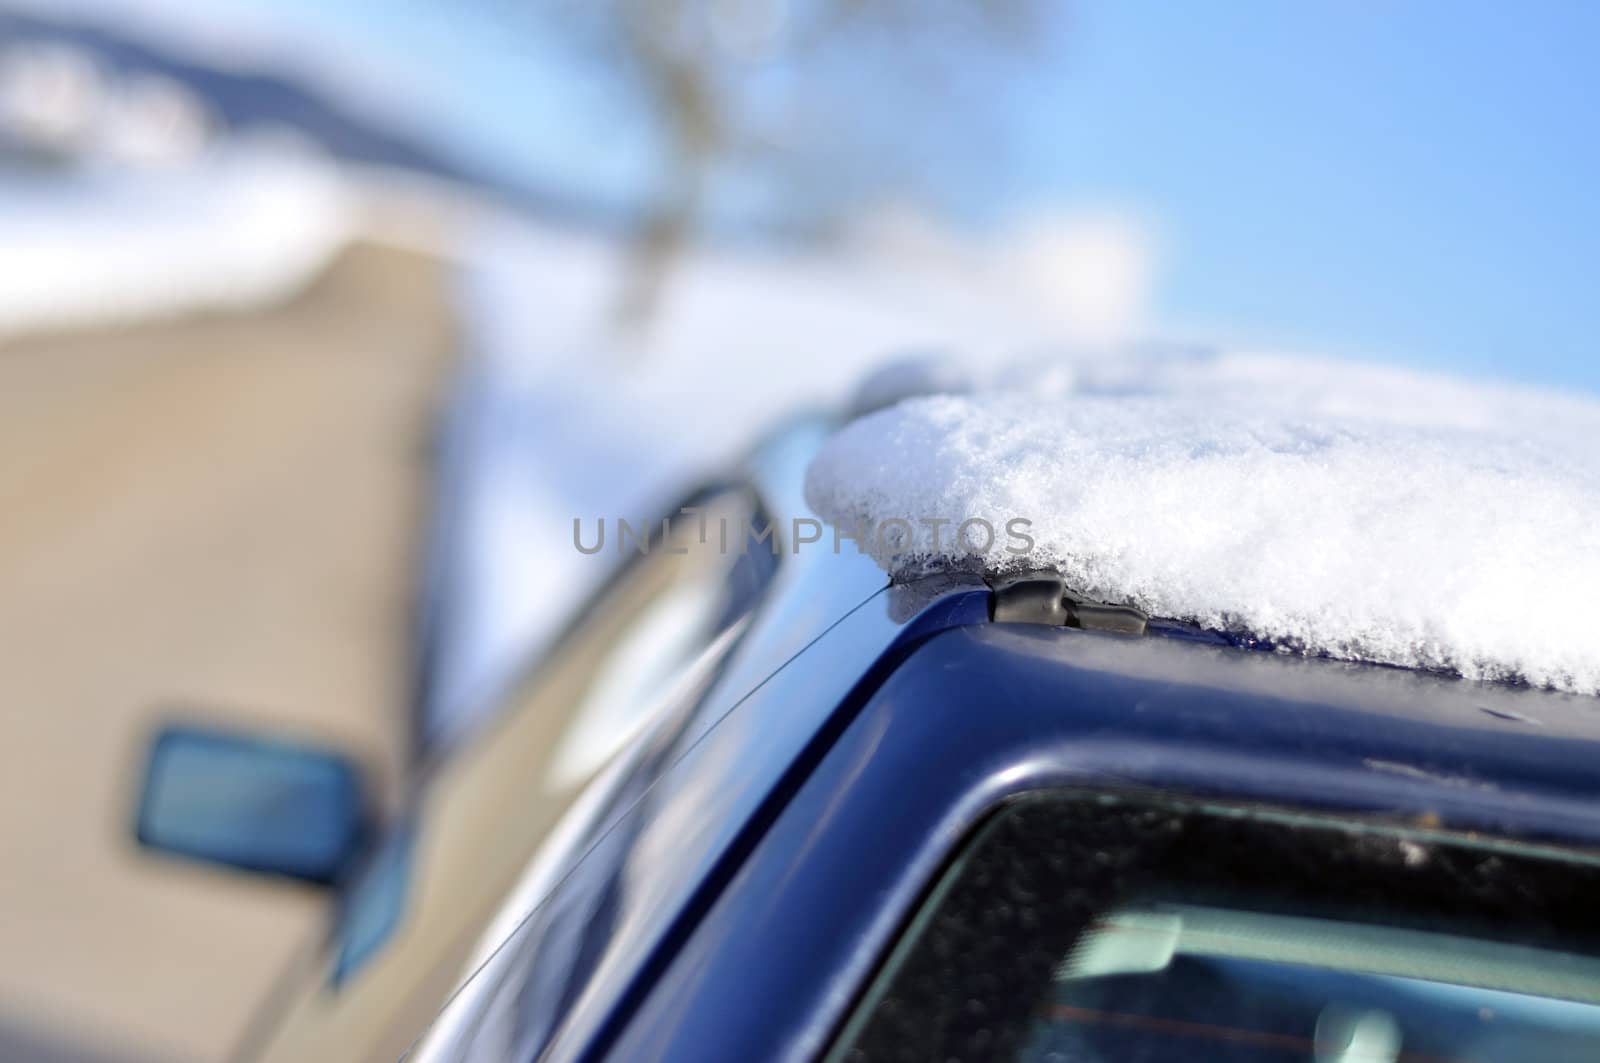 Snow on the car by Rainman